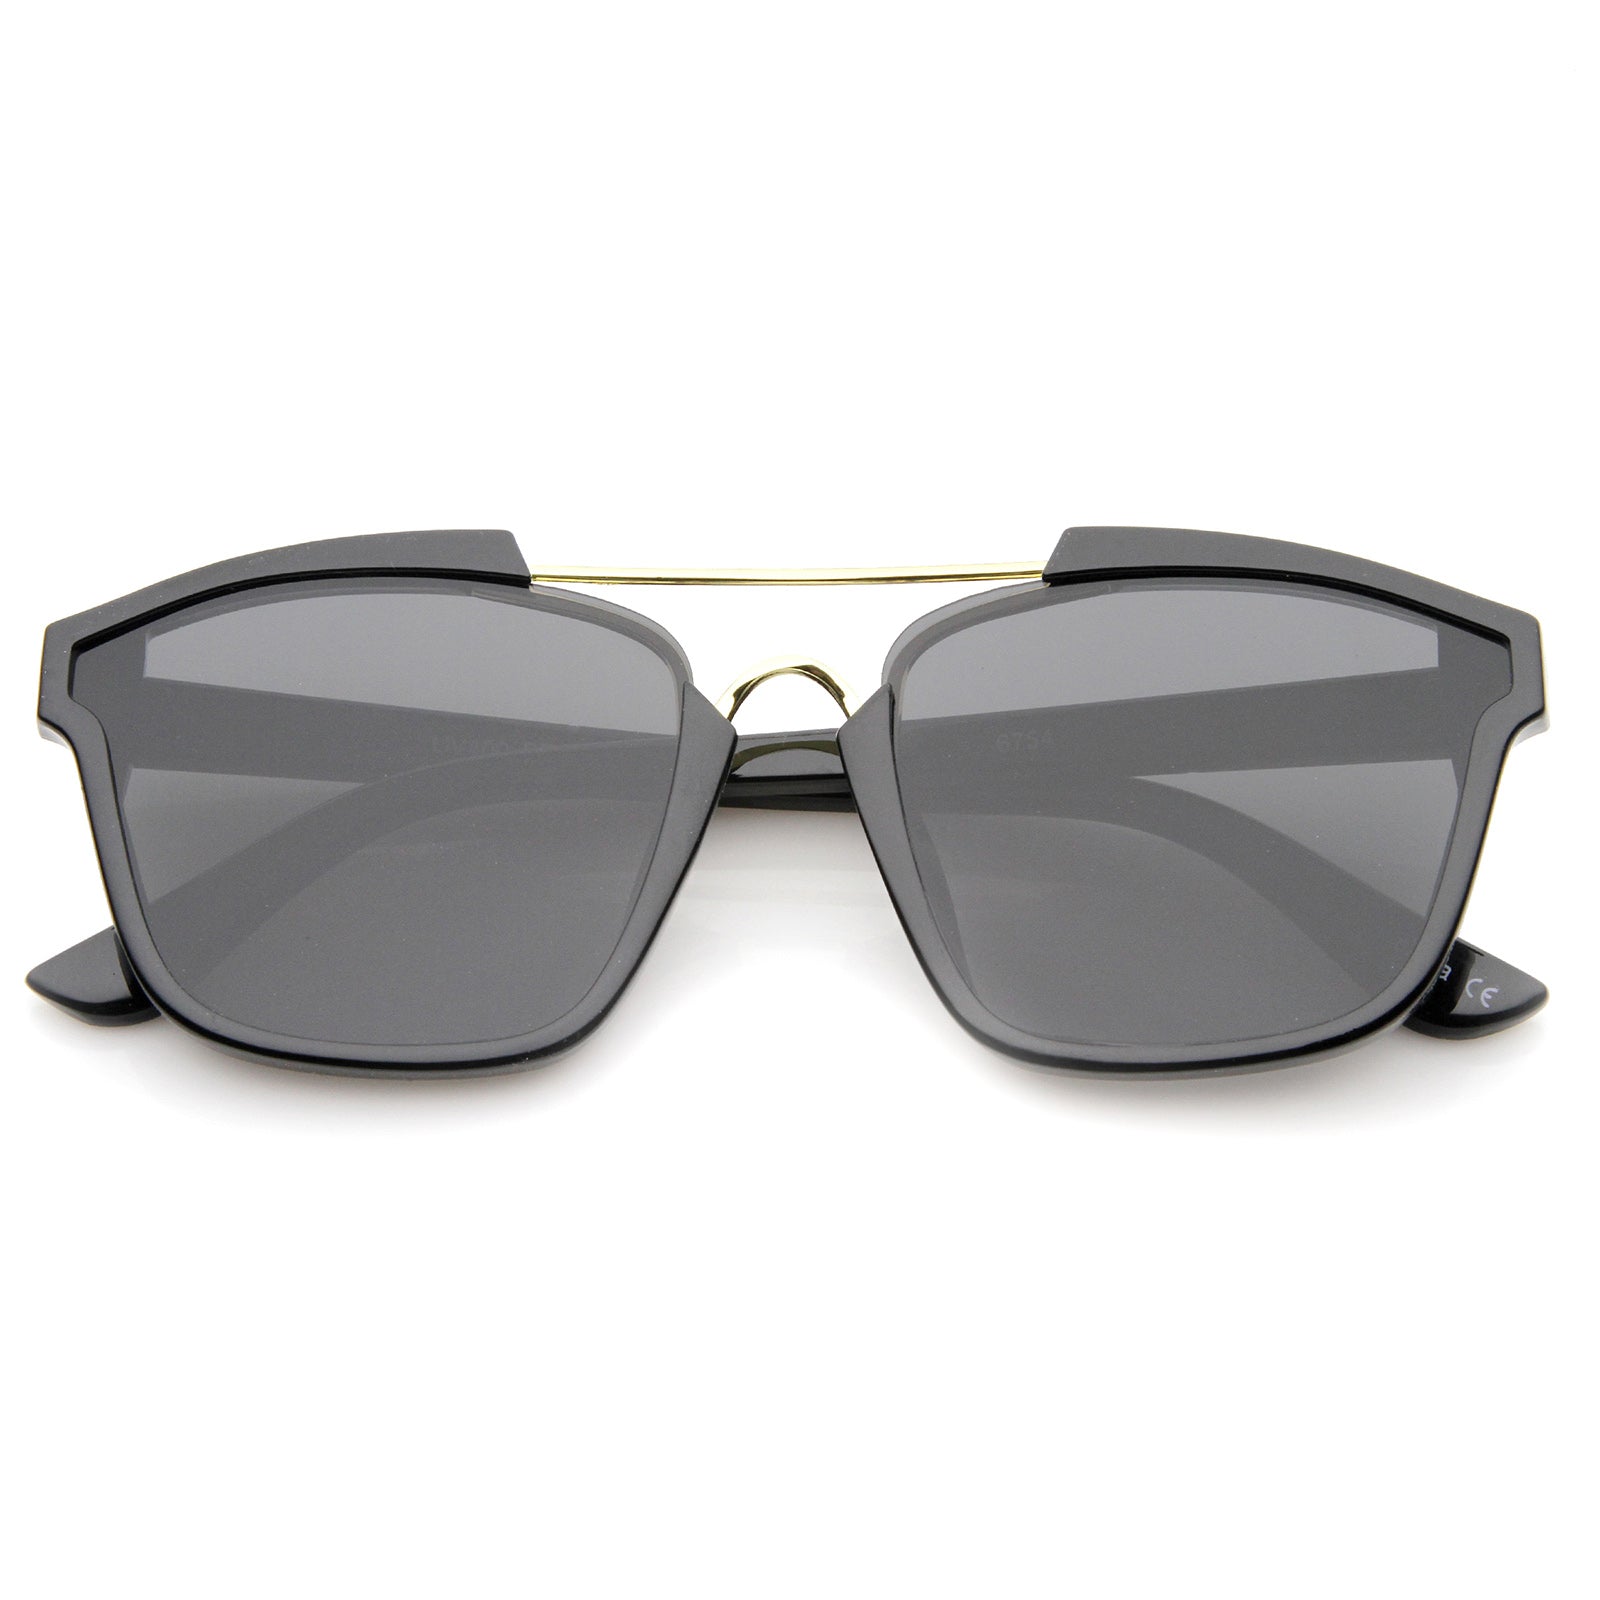 Modern Semi-Rimless Horn Rimmed Crossbar Flat Lens Square Sunglasses 58mm, Black-Gold / Smoke